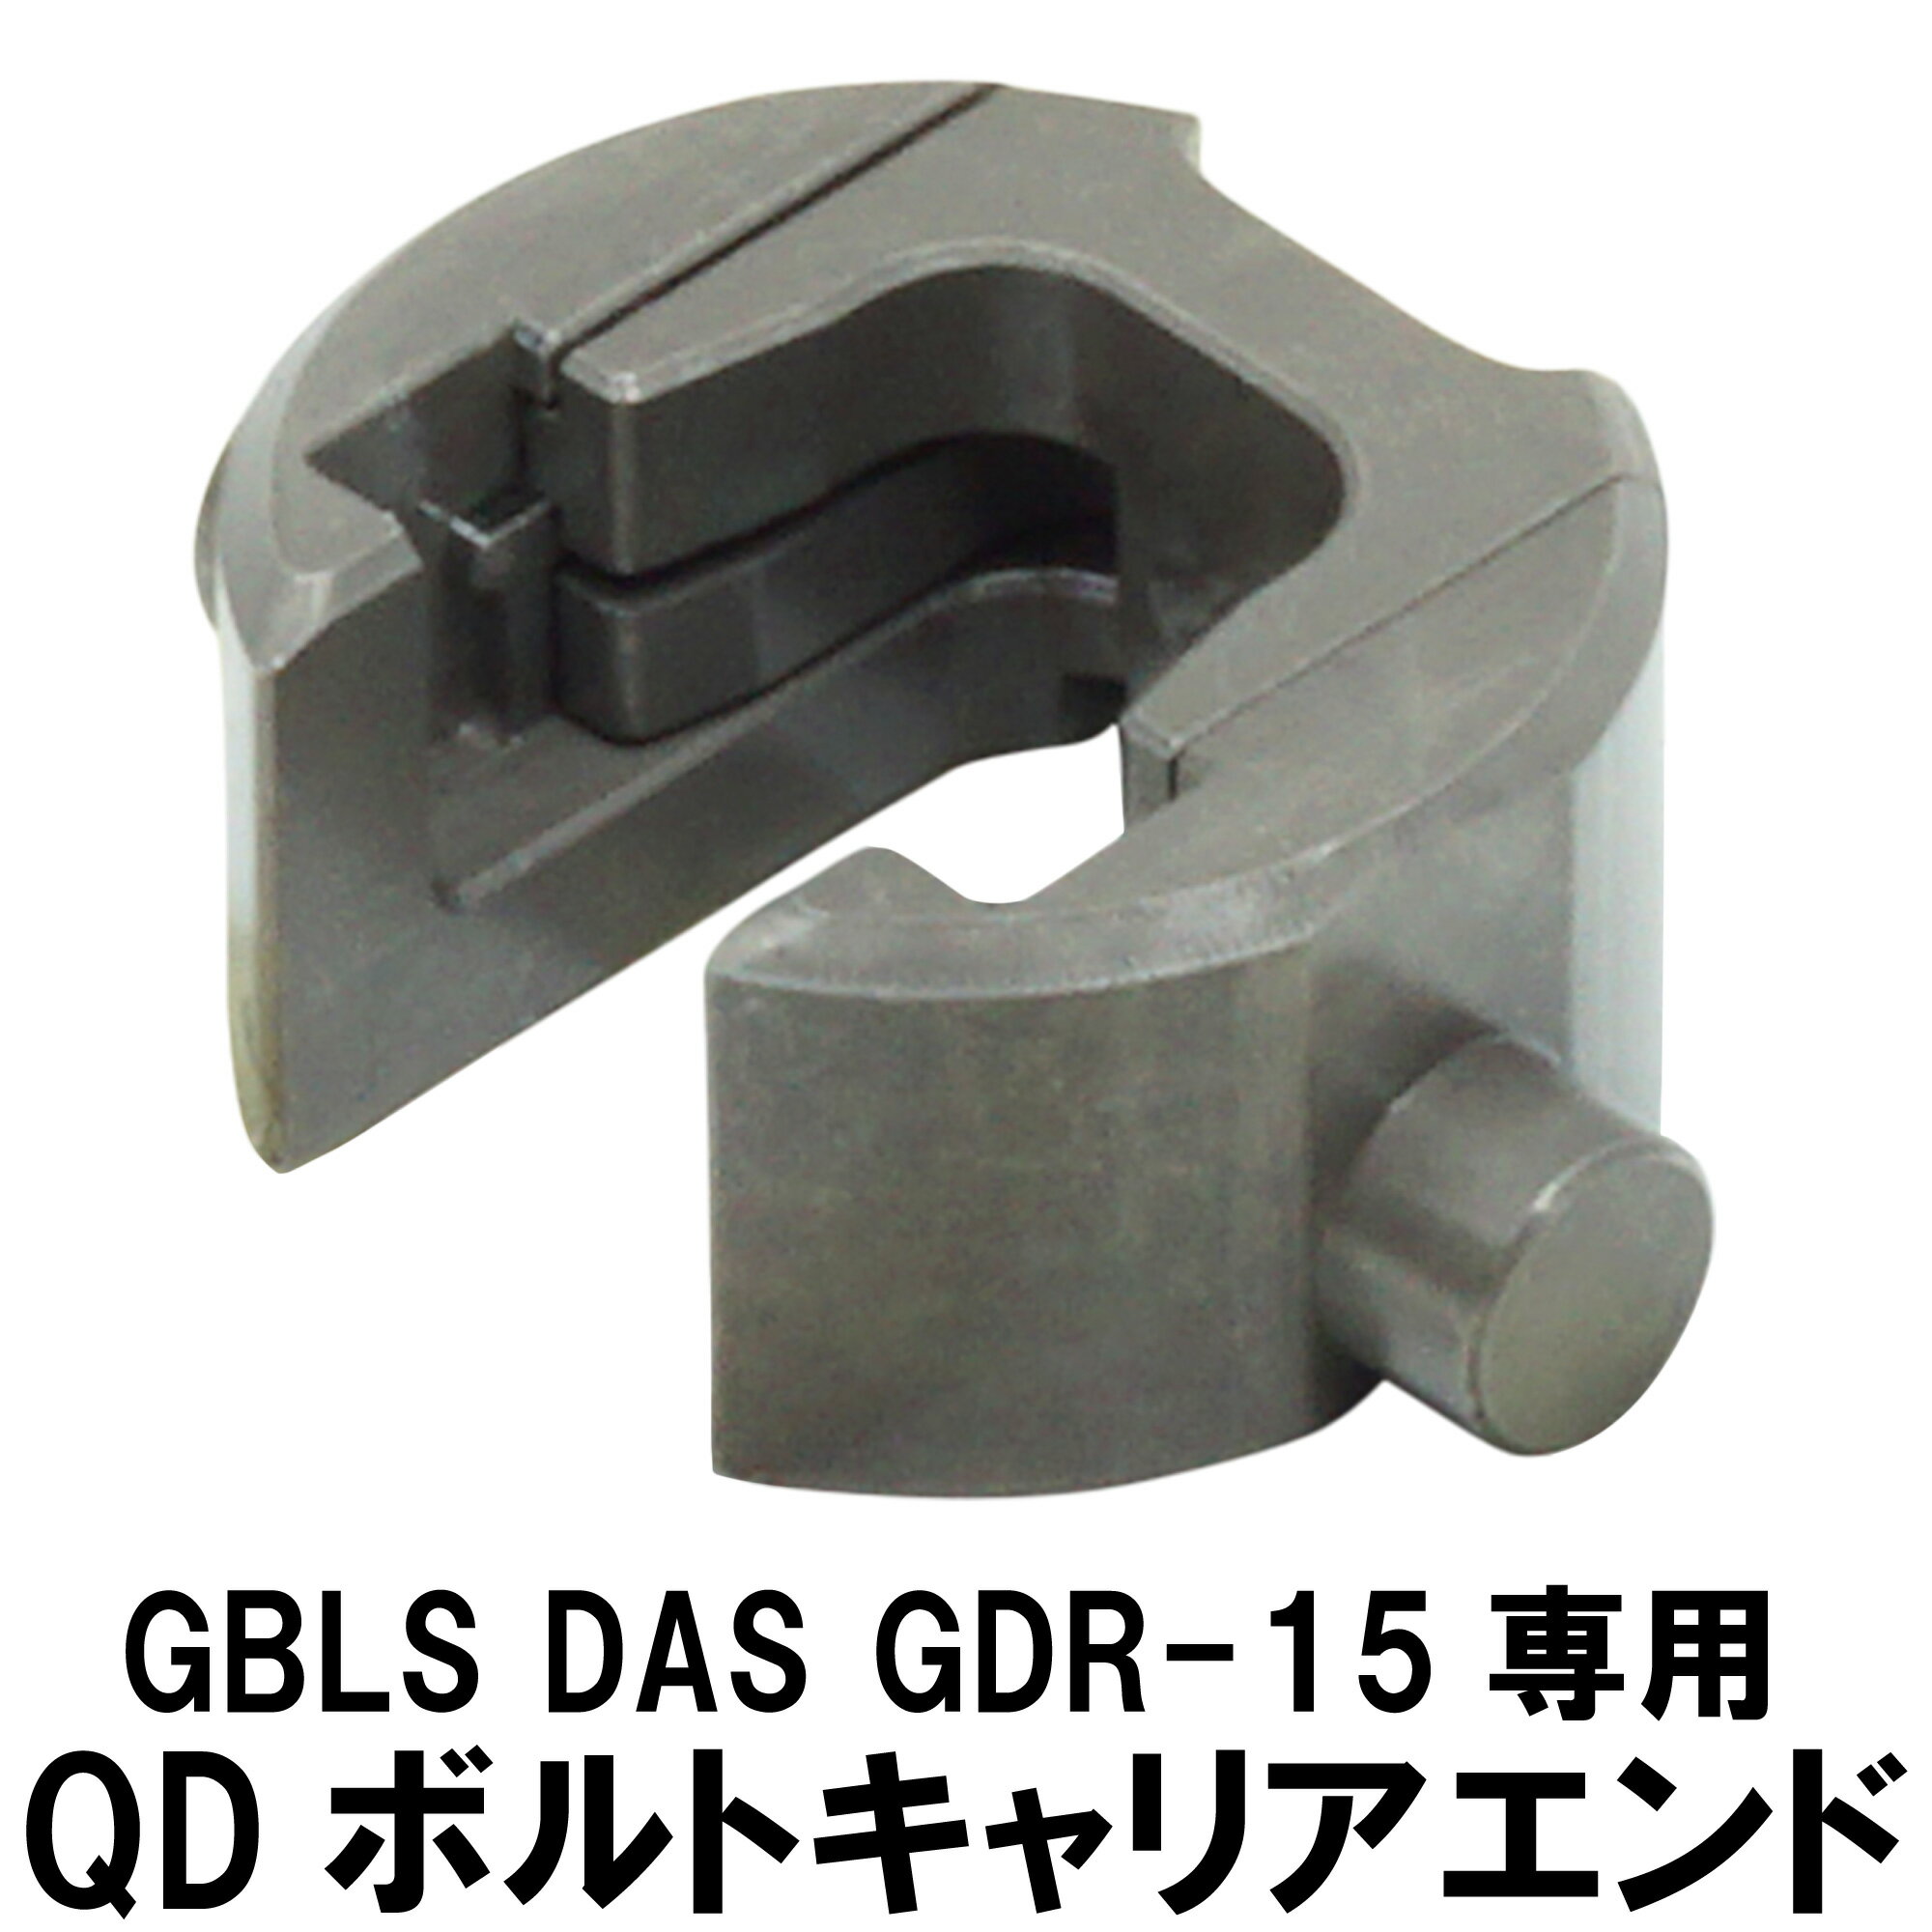 DCI Guns QDボルトキャリアエンド GBLS DAS GDR-15 用 エアガン エアーガン カスタム サバゲー サバイバルゲーム サバイバル パーツ カスタムパーツ メンテナンス 1